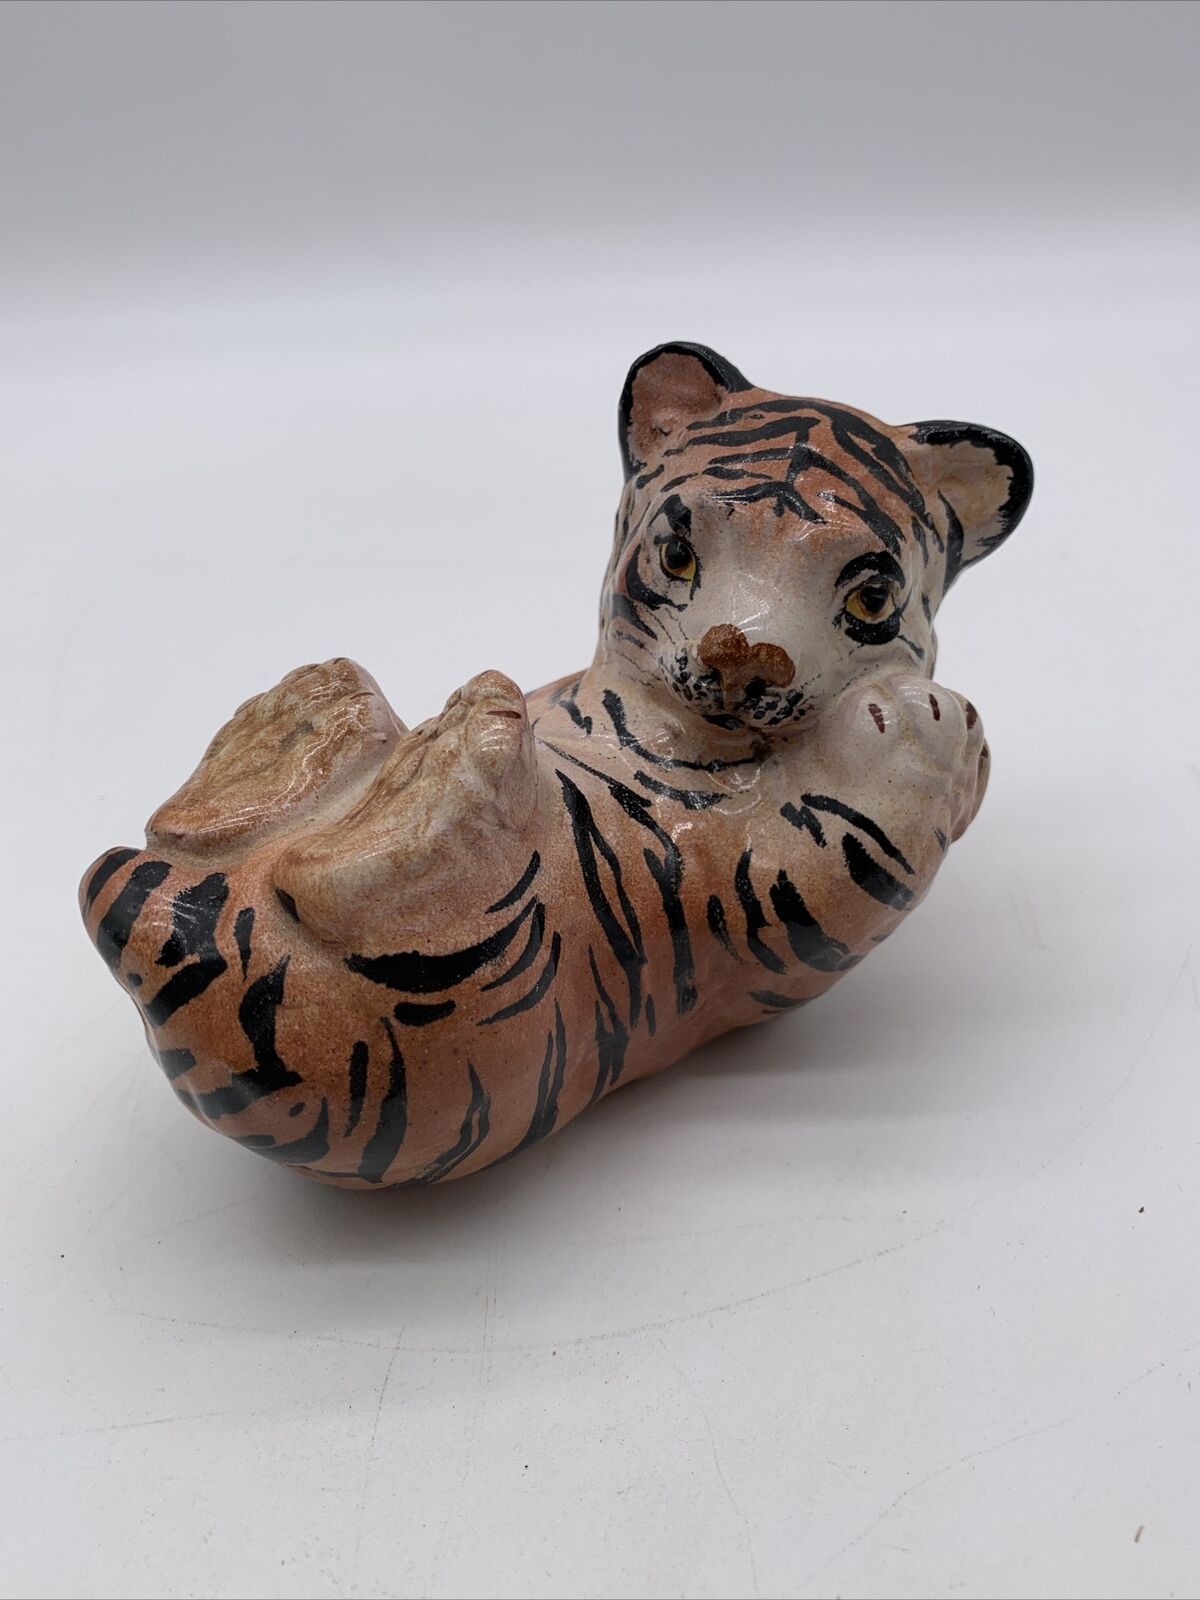 Vintage Tiger Statue Sculpture Figurine Porcelain/Ceramic. 5.5”